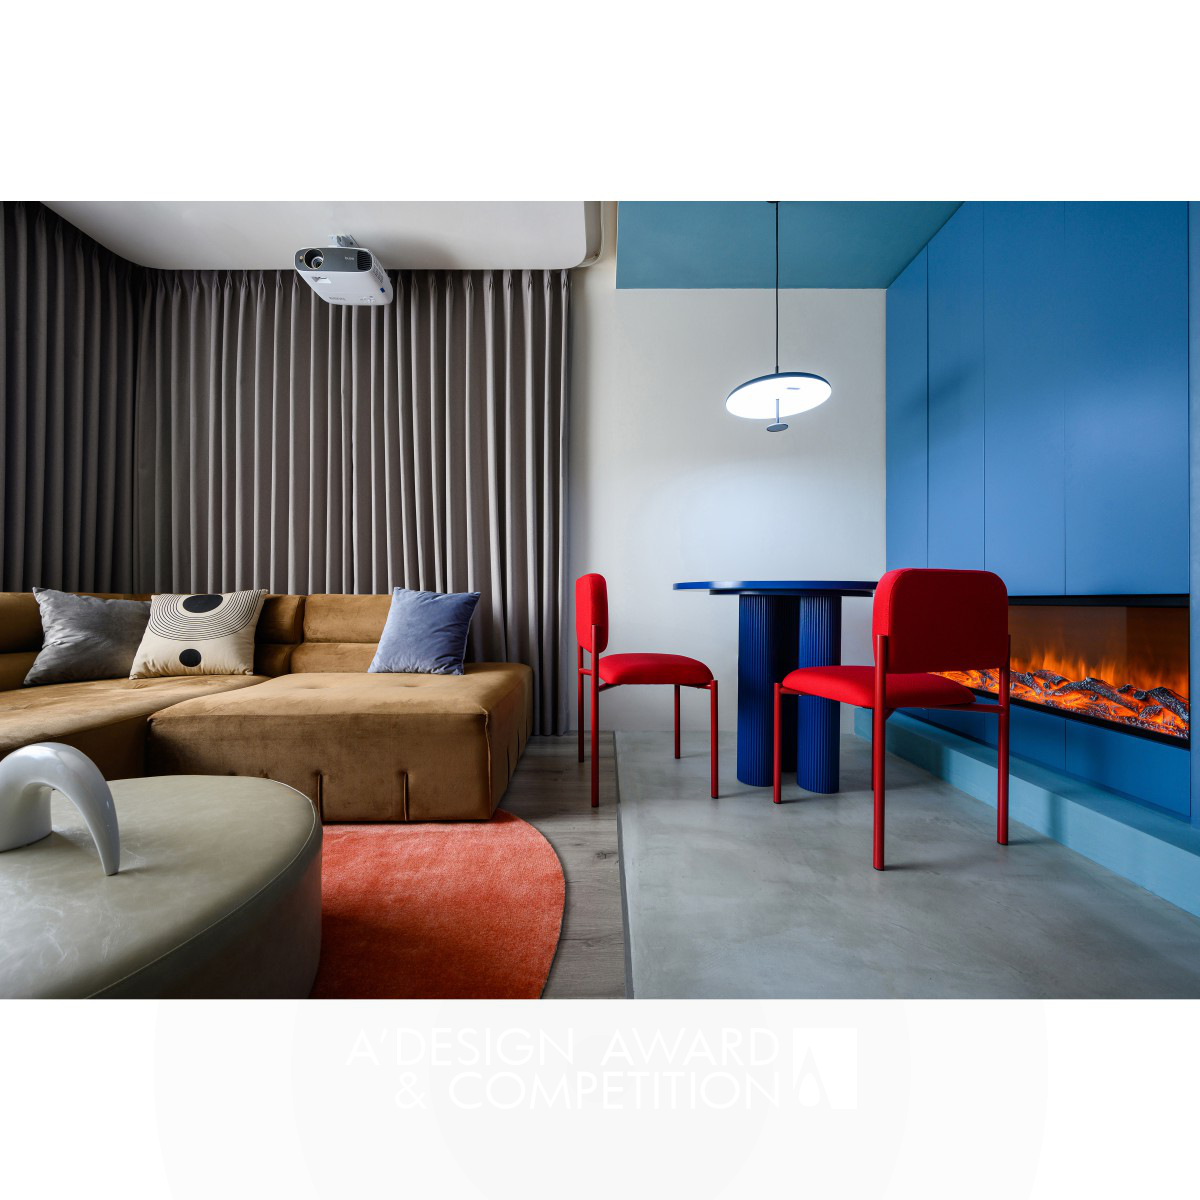 Yanfei Li Small Apartment Design